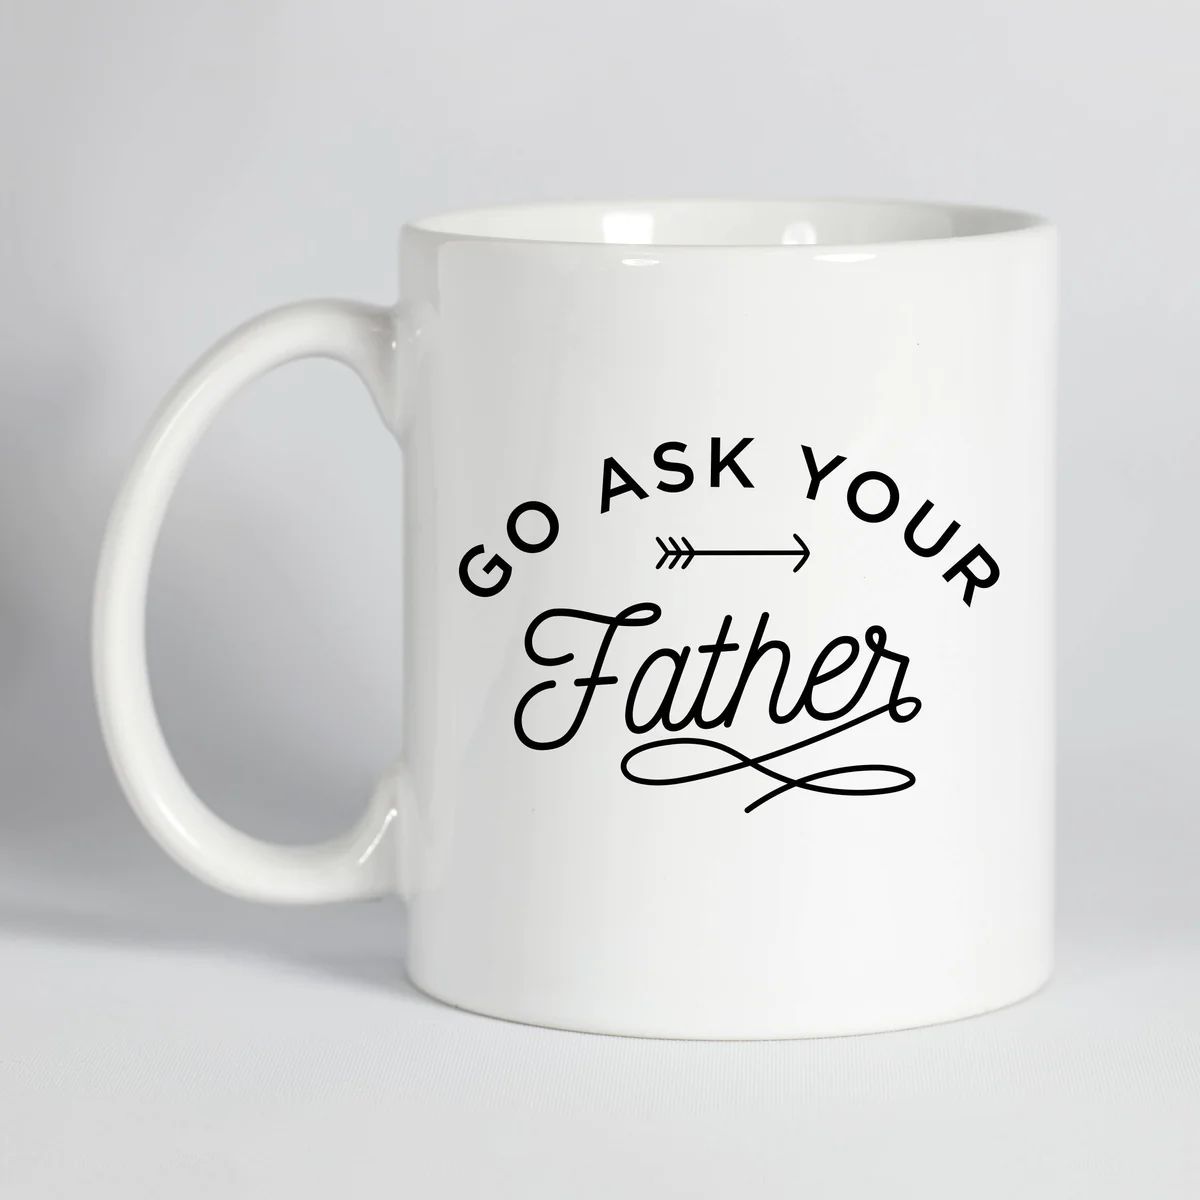 Go Ask your Father Mug | Type League Press